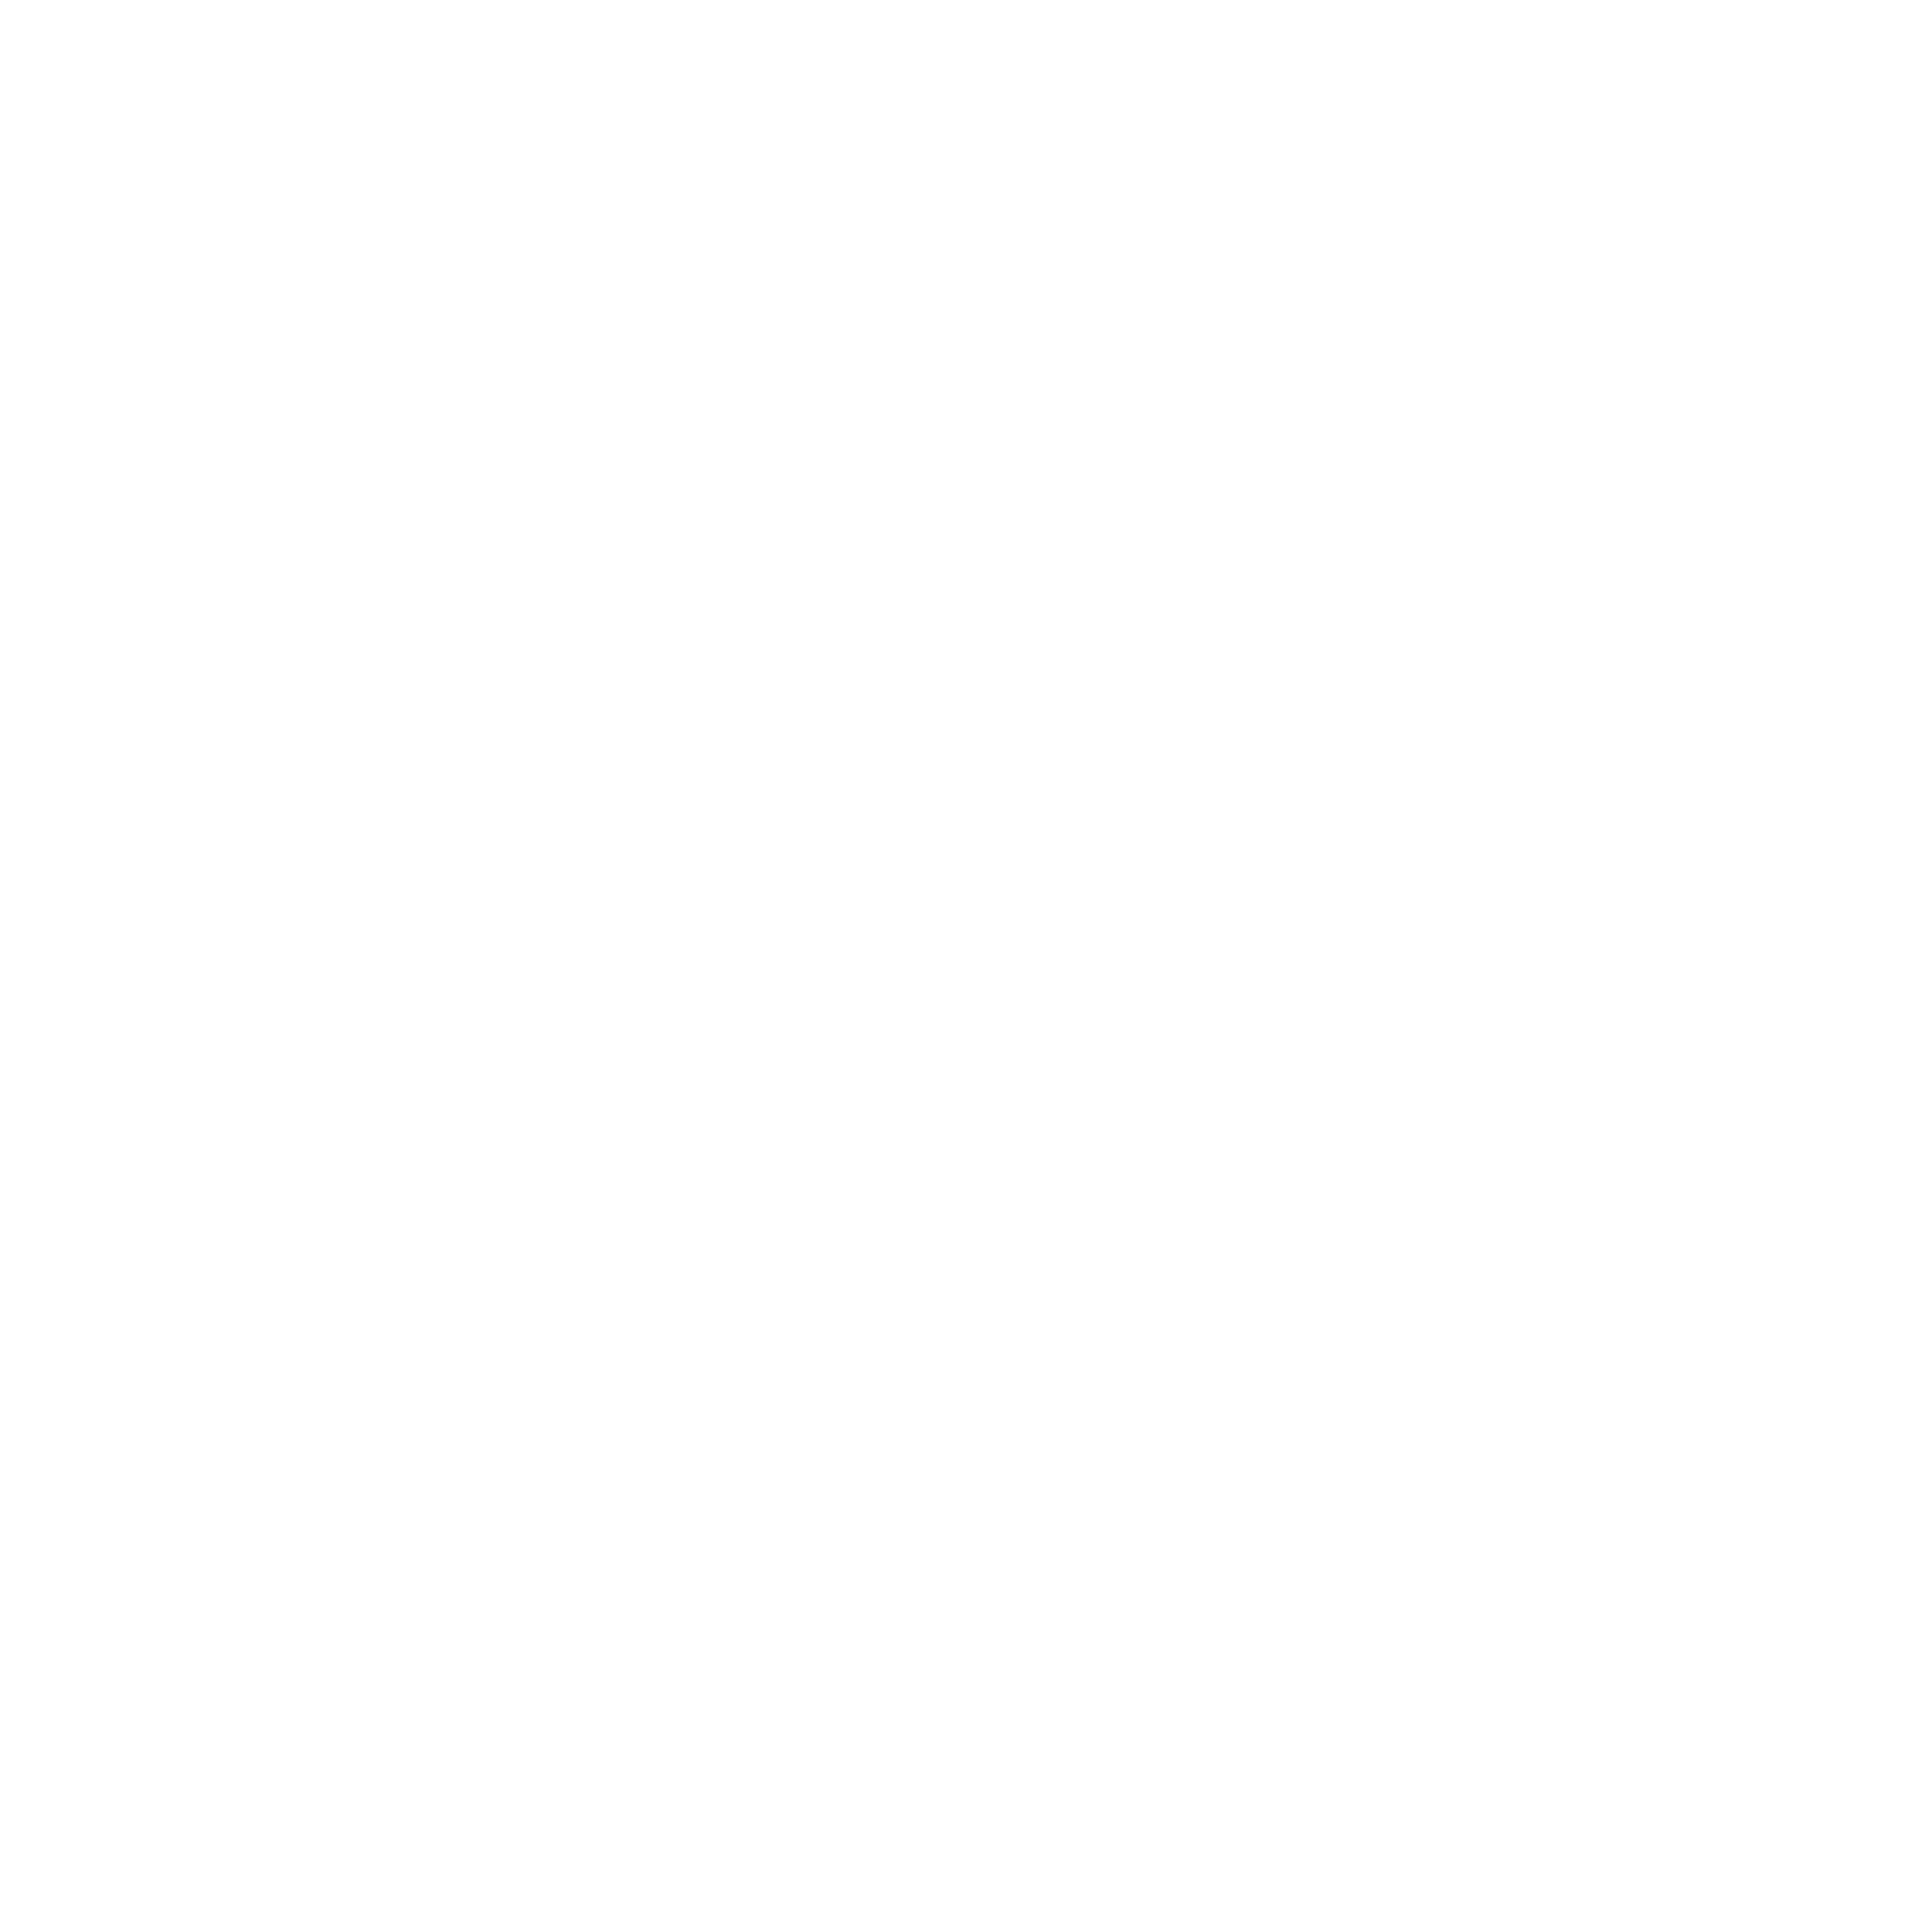 BrainLuxury logo